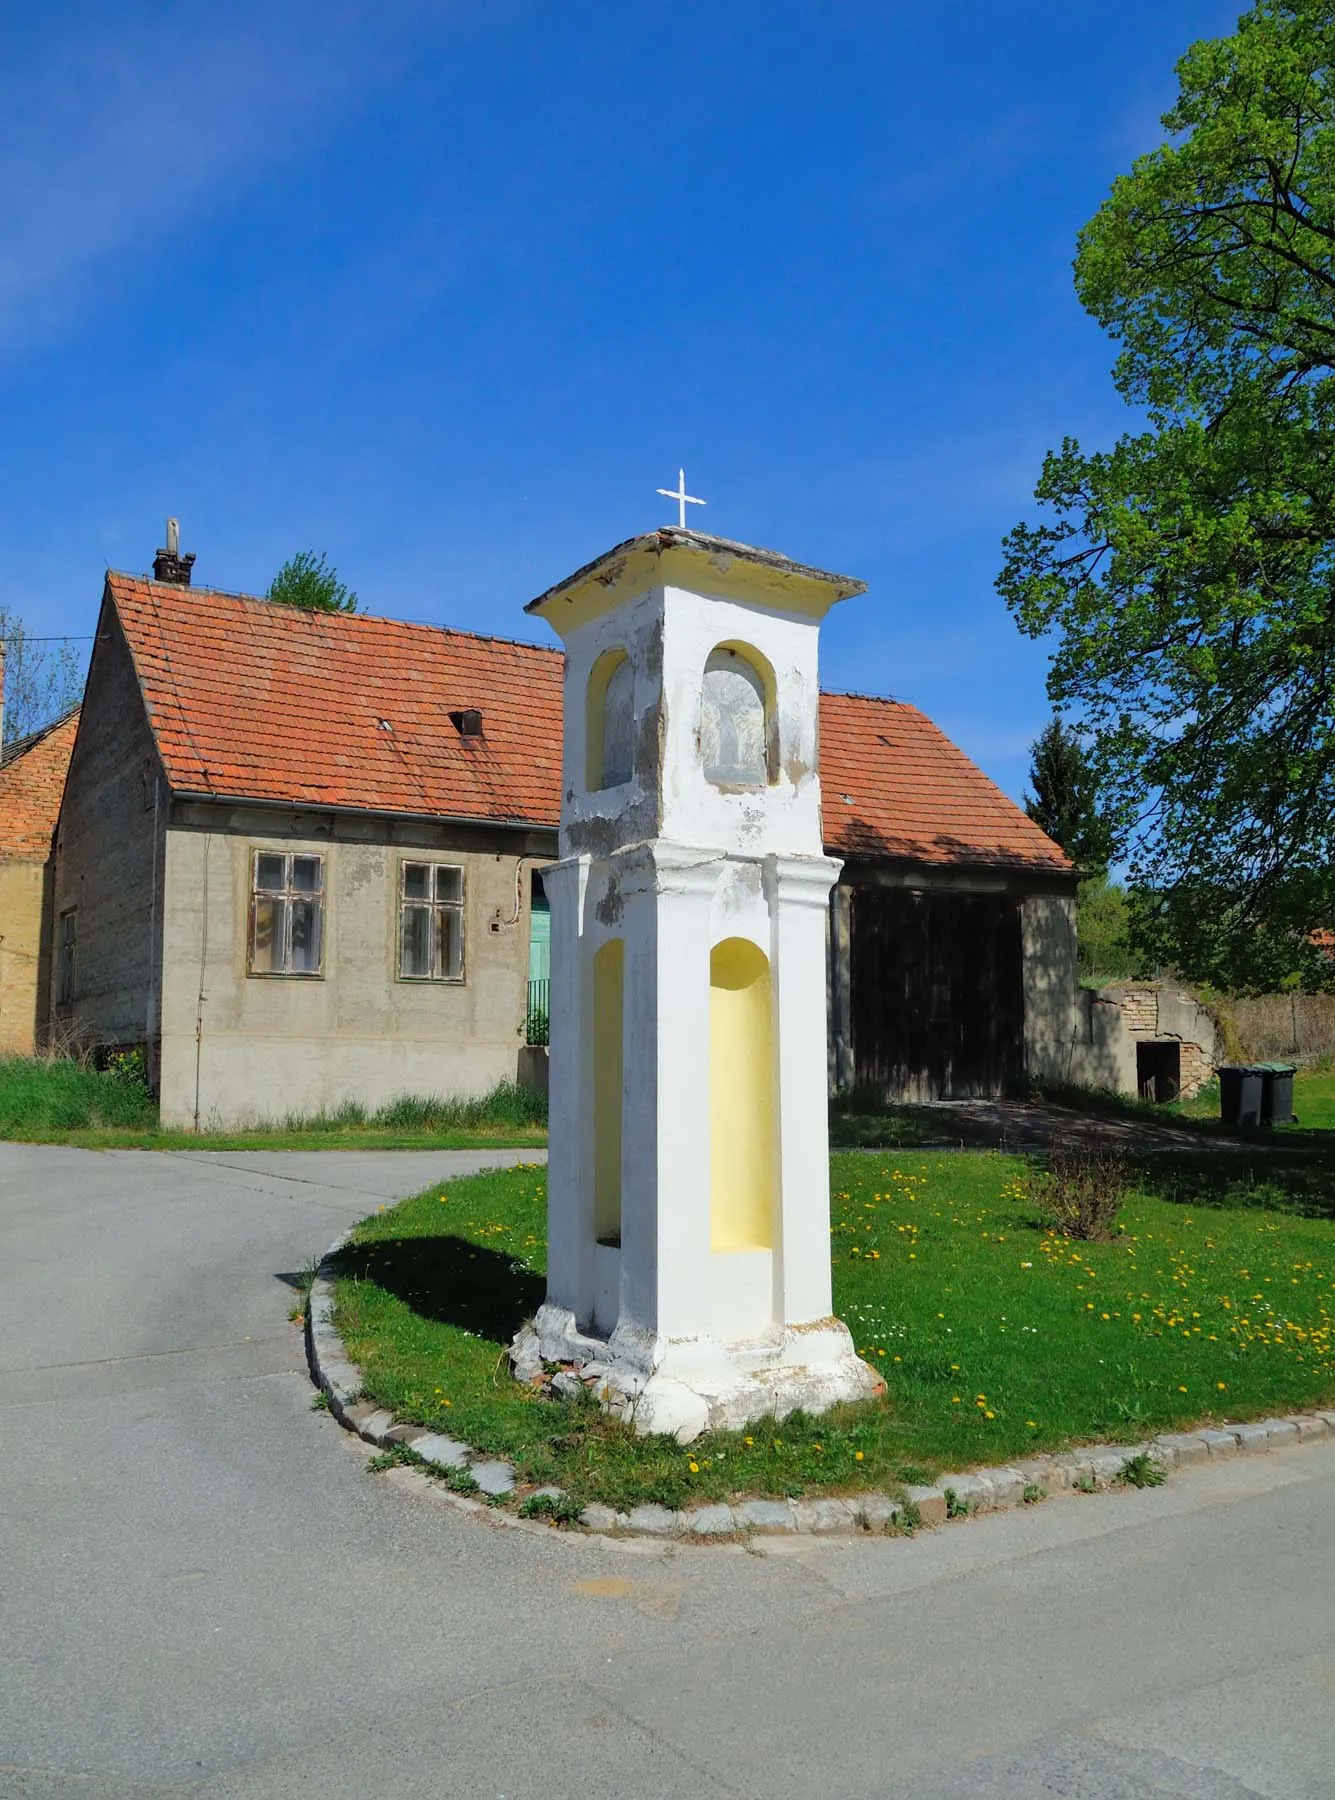 Photo showing: Wayside shrine in Falkenstein, Lower Austria, Austria